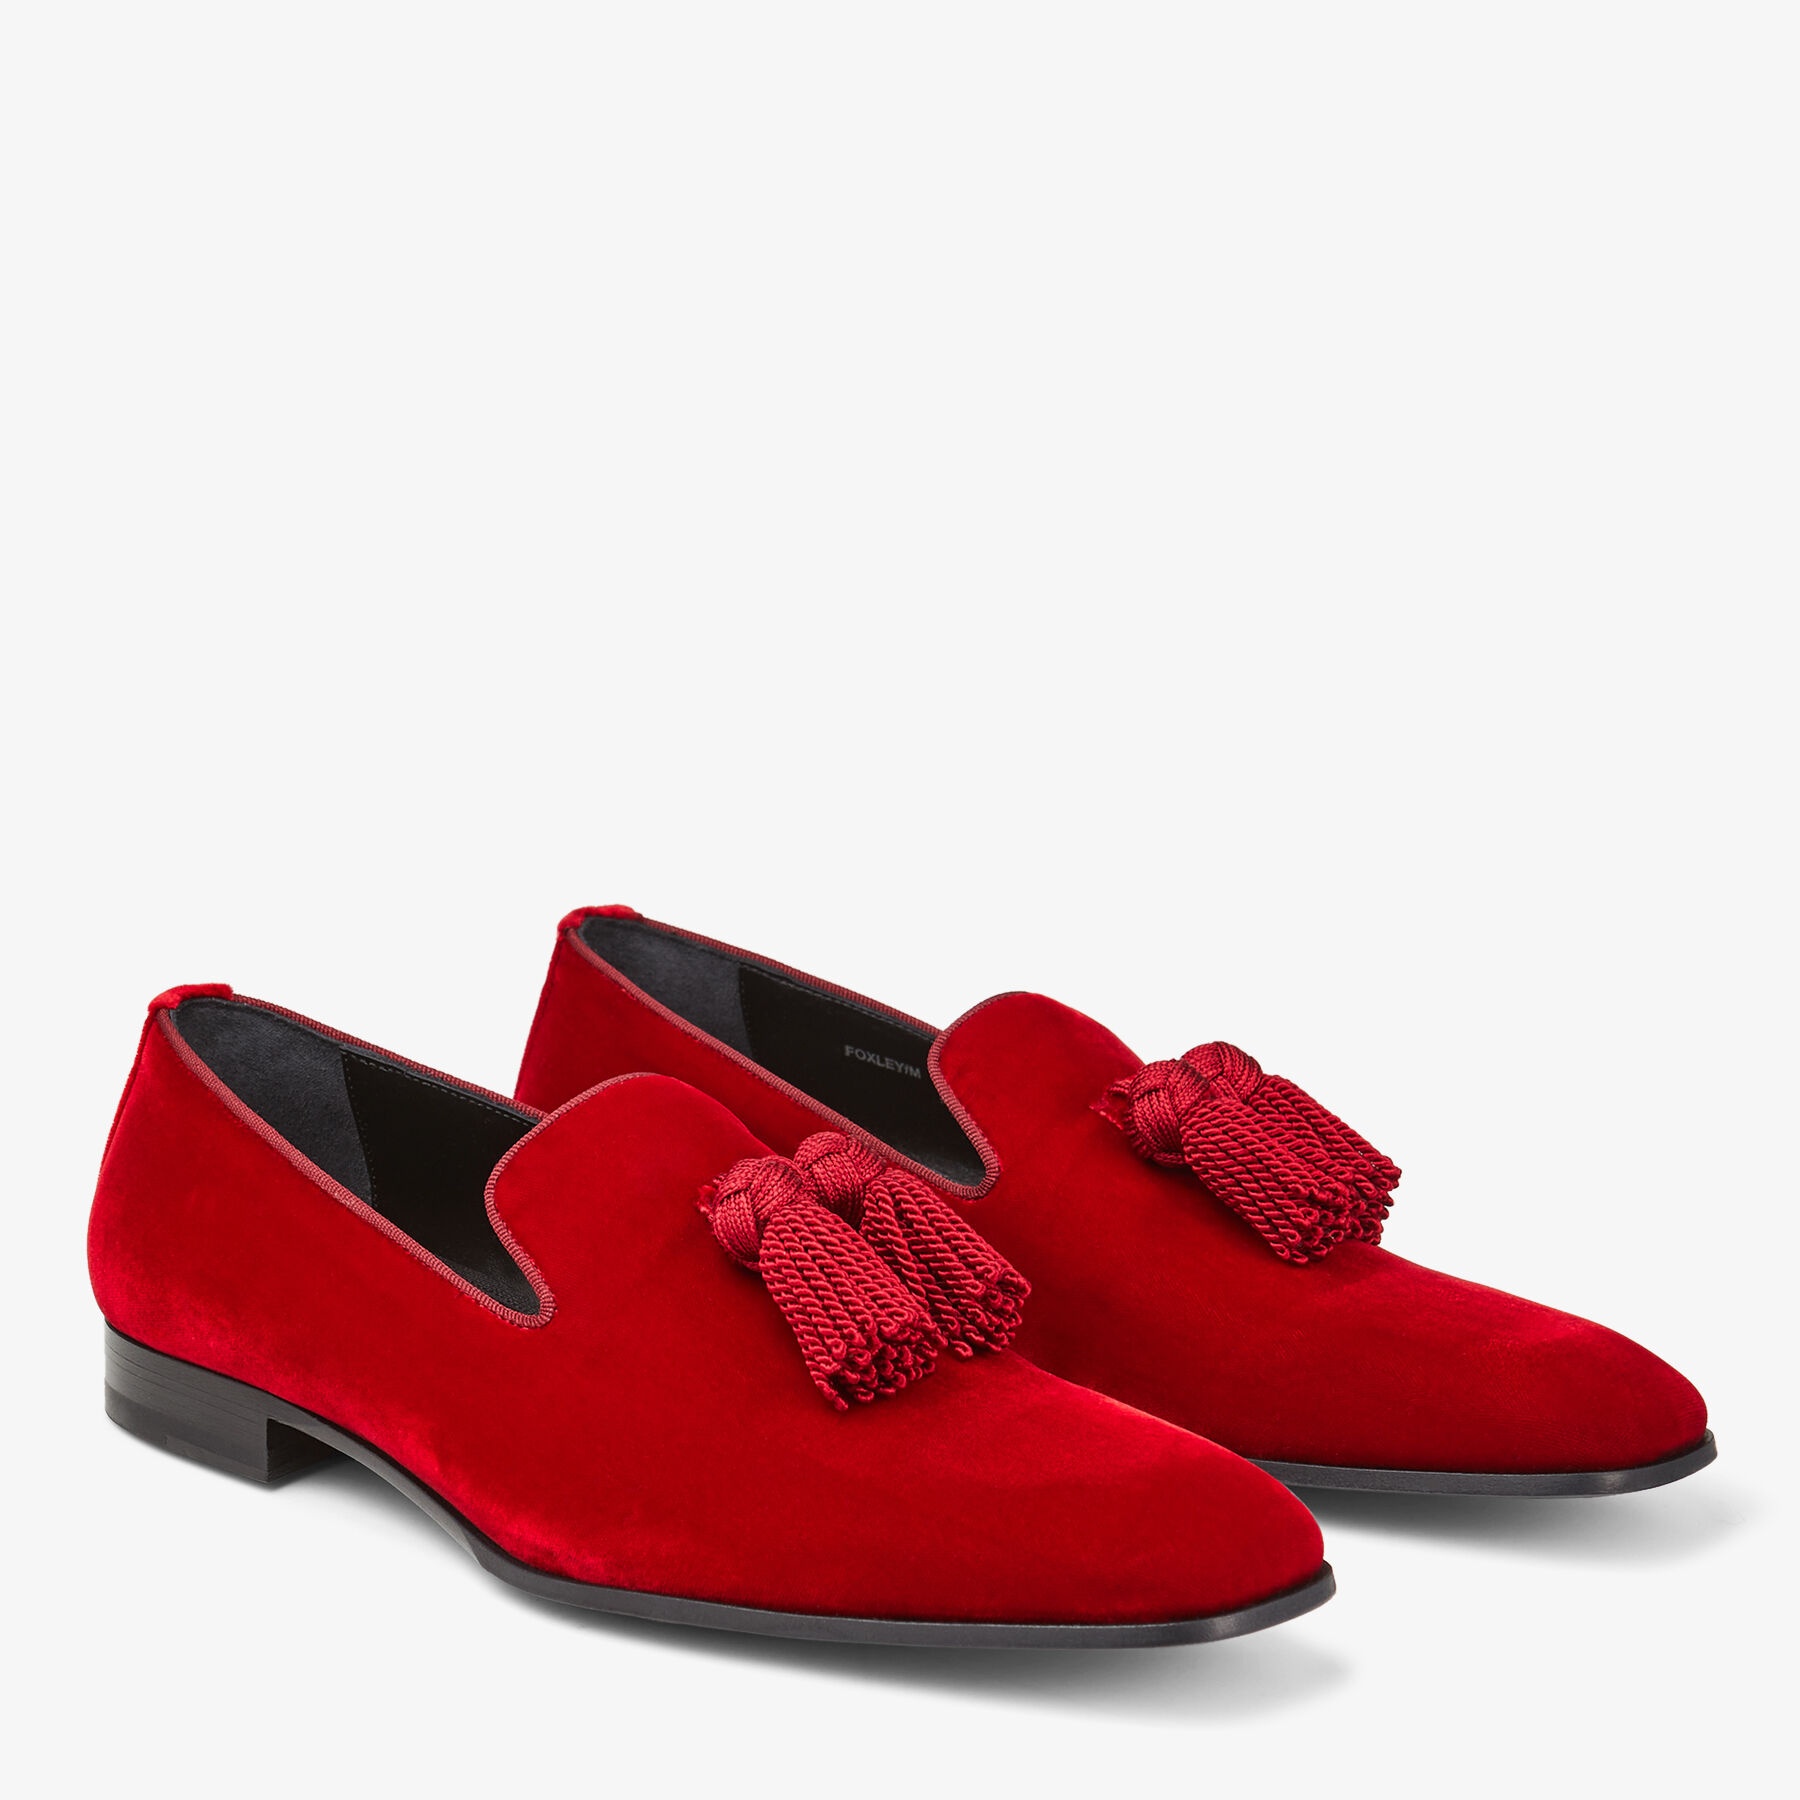 Foxley/M
Red Velvet Slip-On Shoes with Tassel - 2